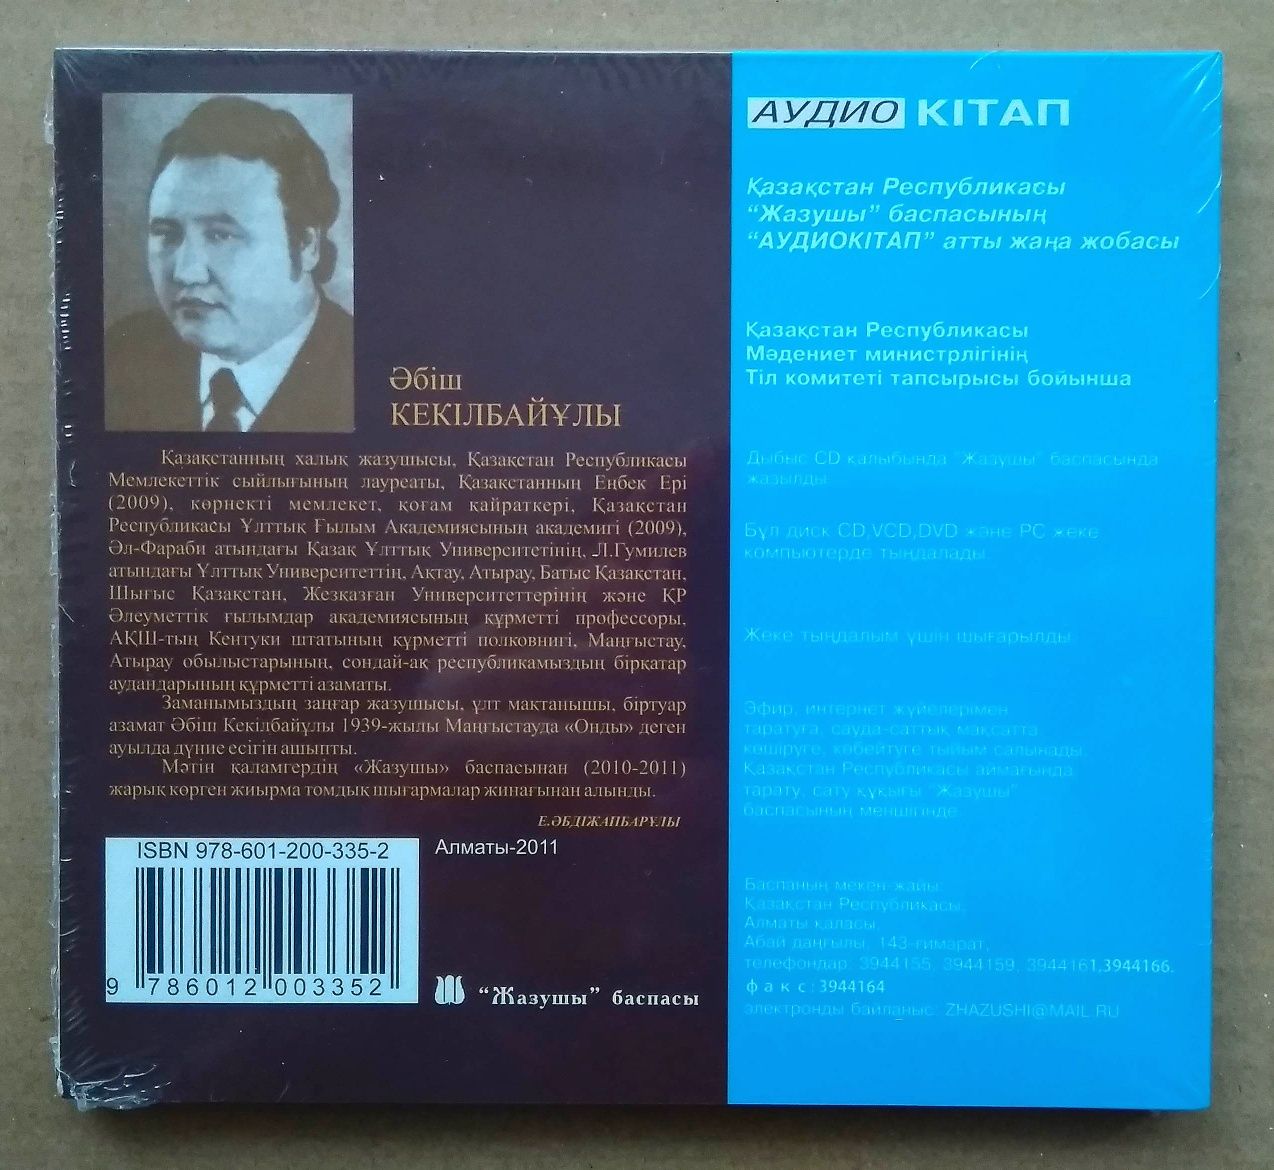 Аудиокниги на казахском языке, CD/mp3